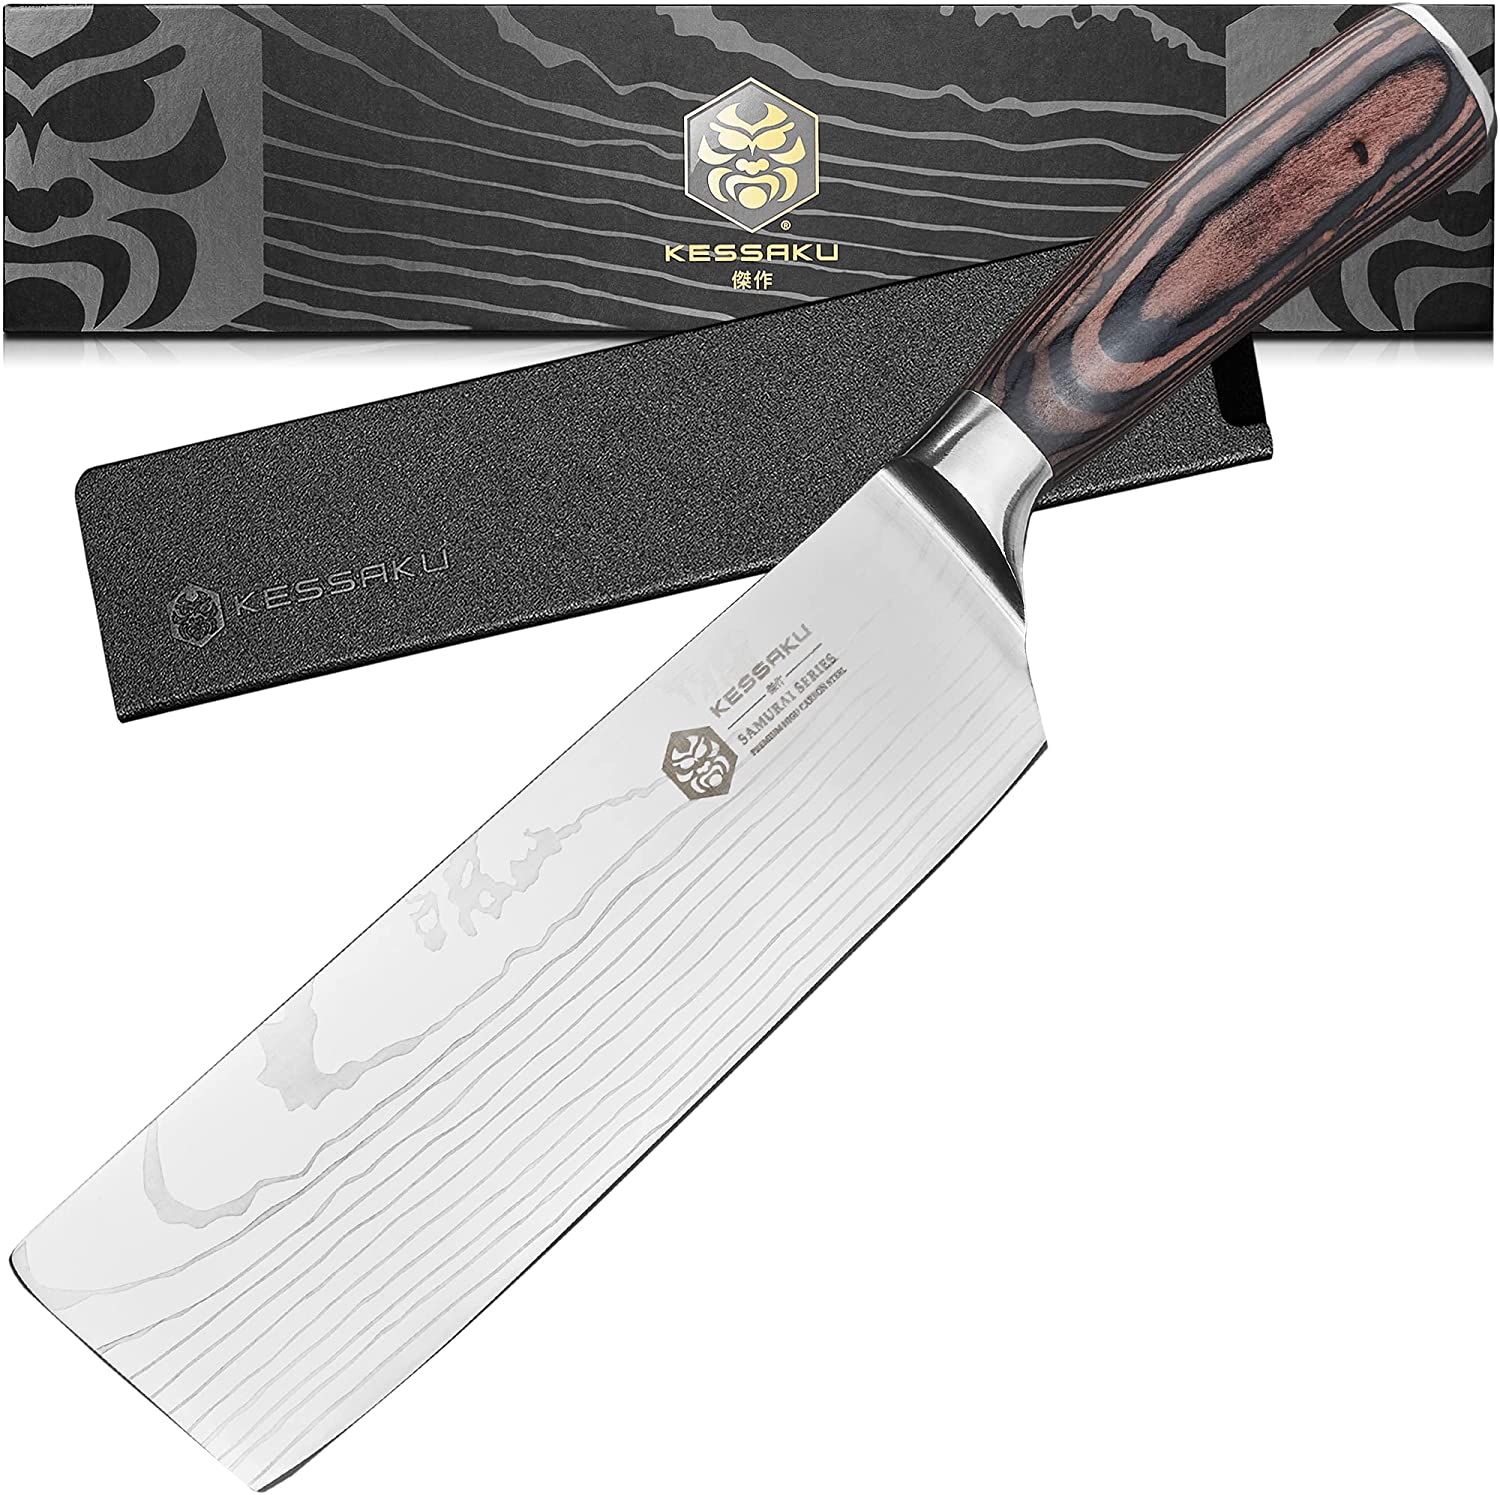 Best Japanese knife for cutting vegetables- Kessaku 7-Inch Nakiri